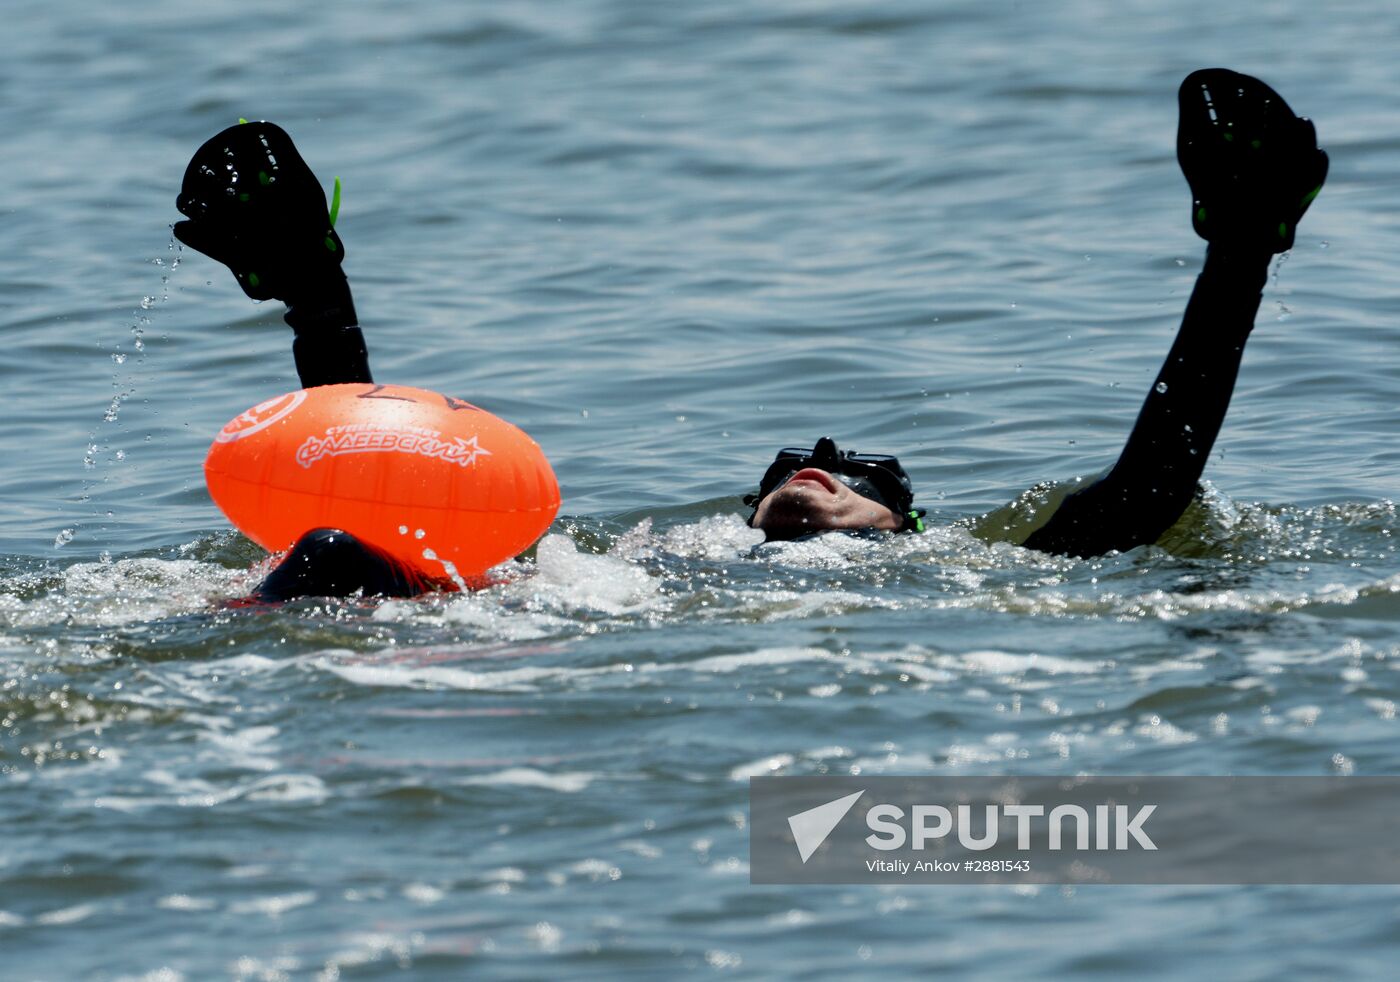 Marathon heat across Amur Bay in Vladivostok